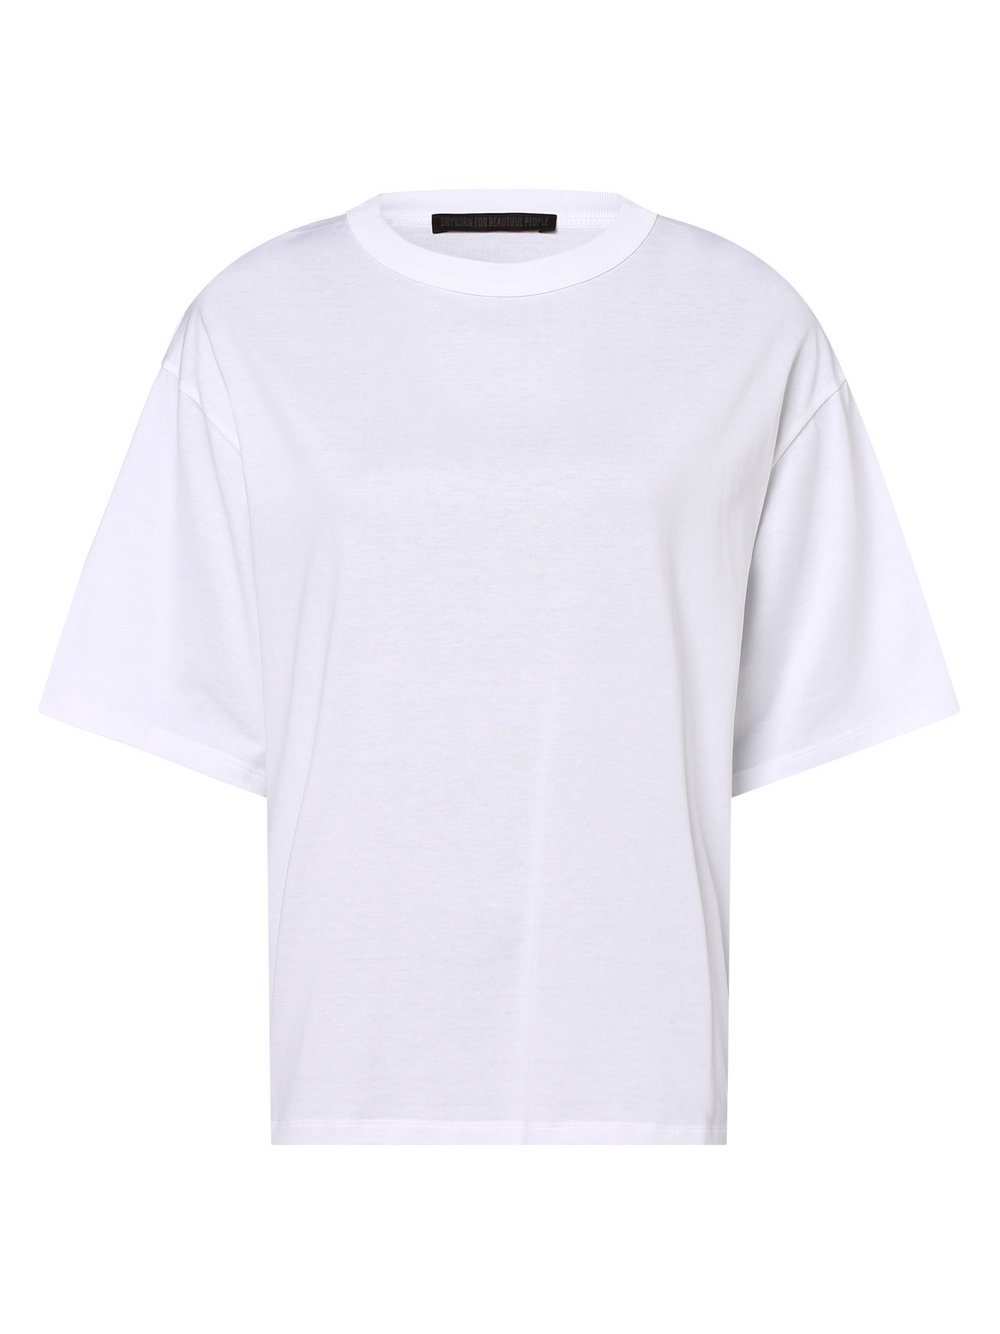 Drykorn - T-shirt damski – Areta, biały